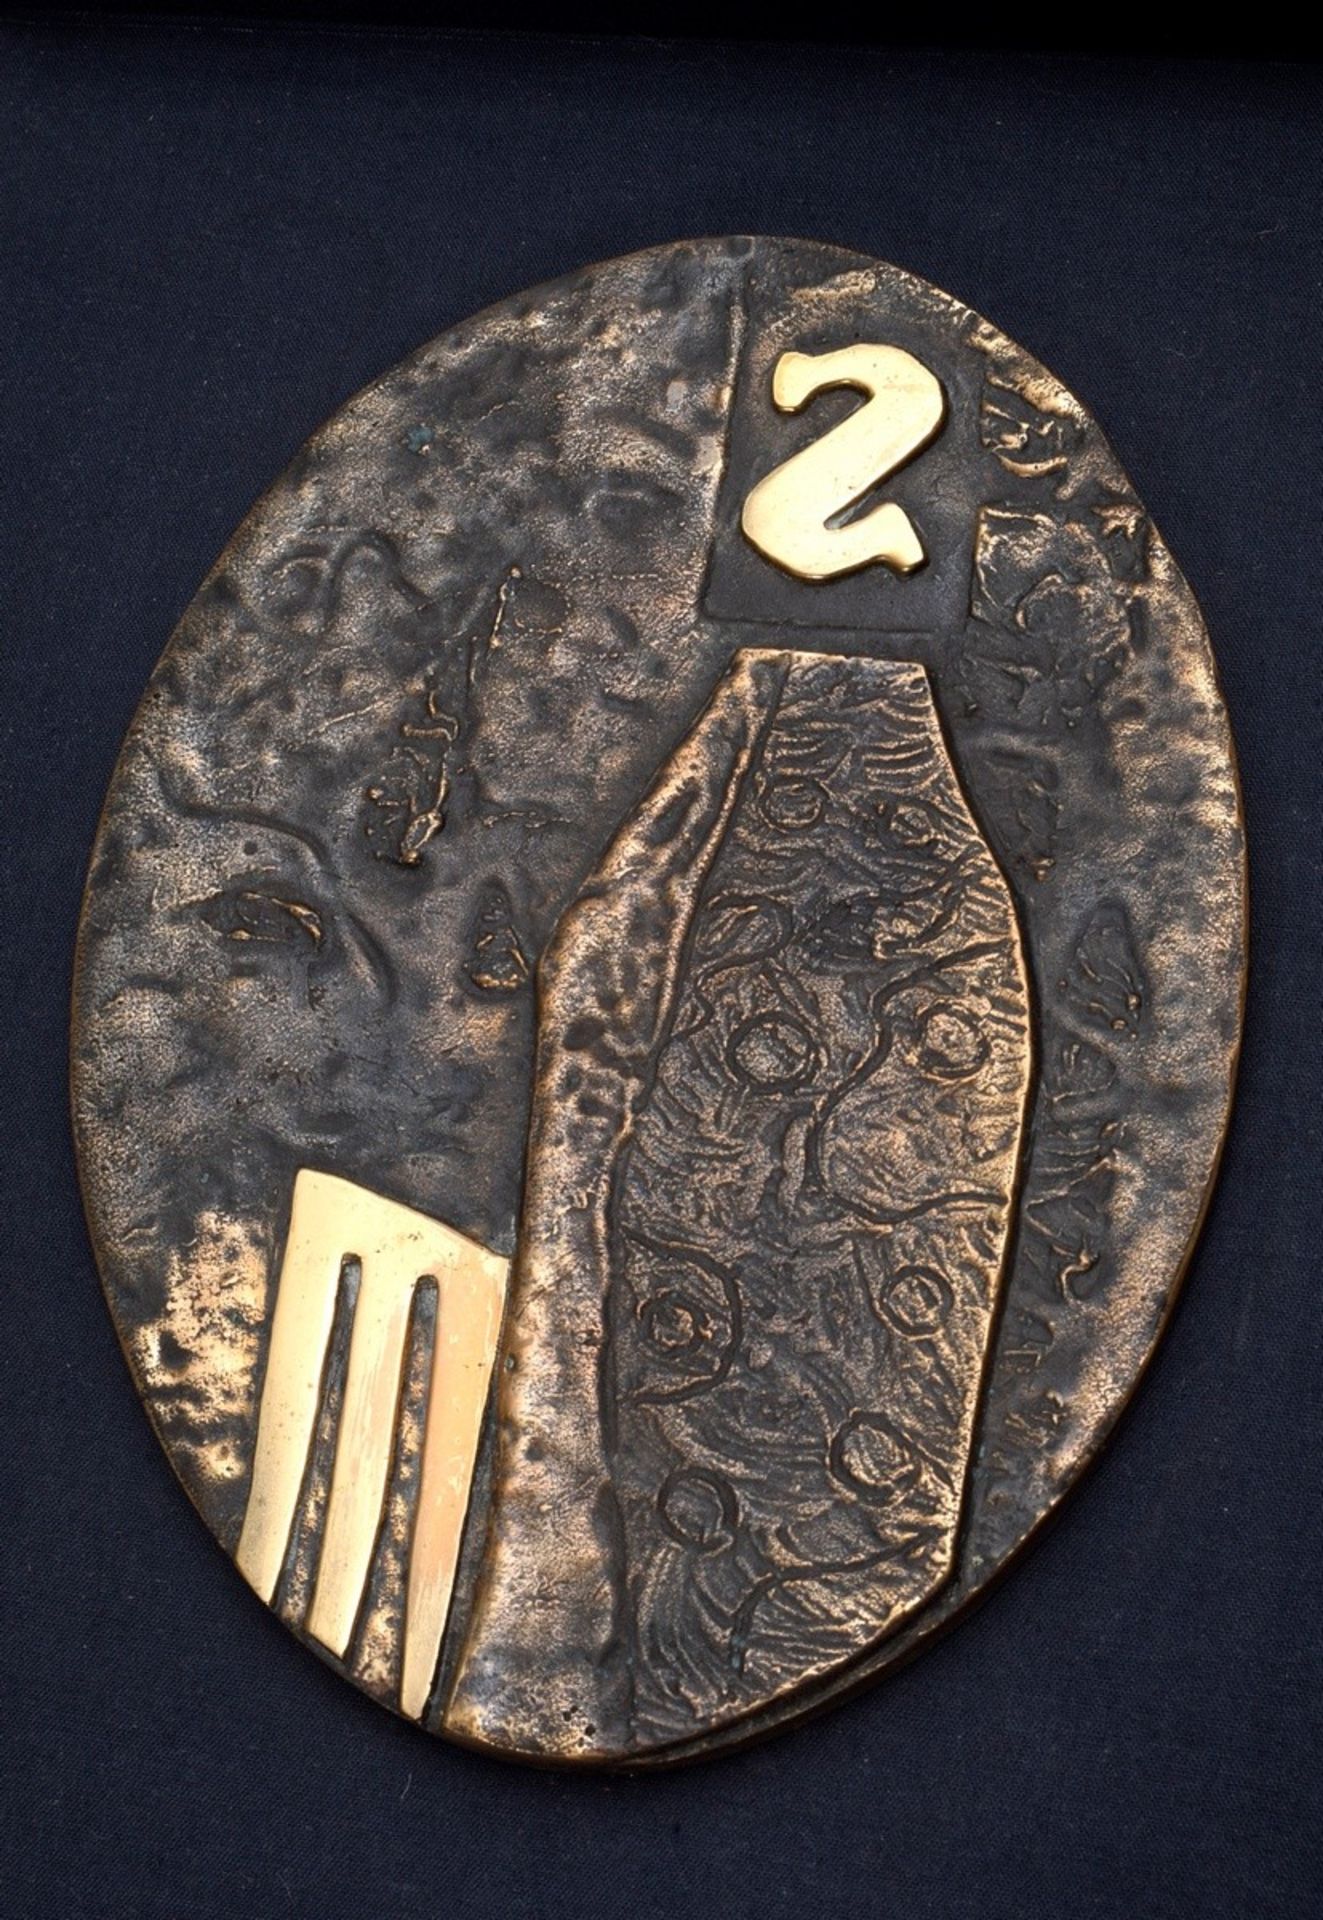 Papart, Max (1911-1994) "Pavane" 1977, bronze and etching/collage, 21/75, u. sign./num. SM 33x26cm, - Image 2 of 6